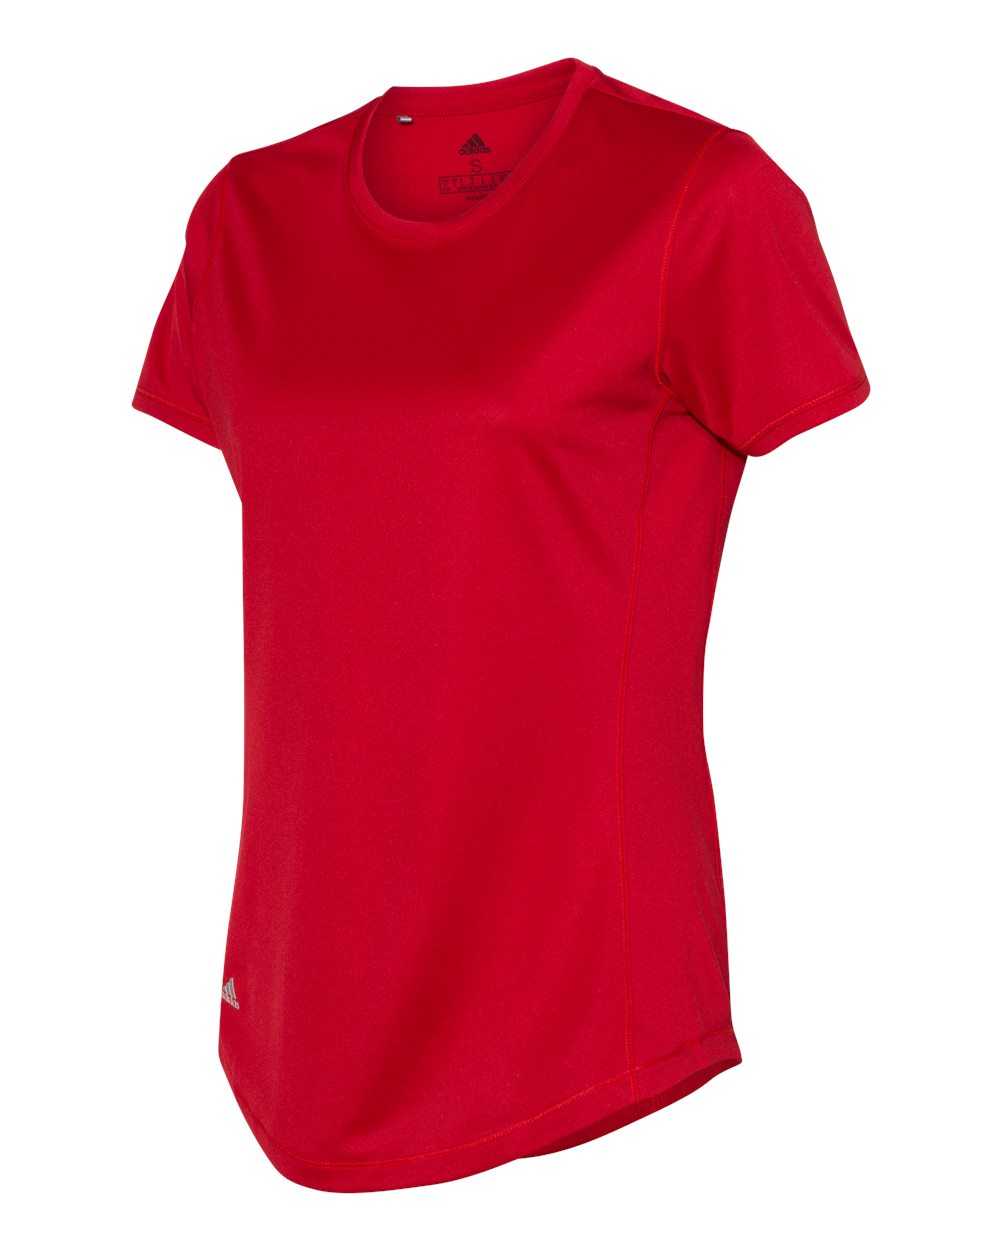 Adidas A377 Women's Sport T-Shirt - Power Red - HIT a Double